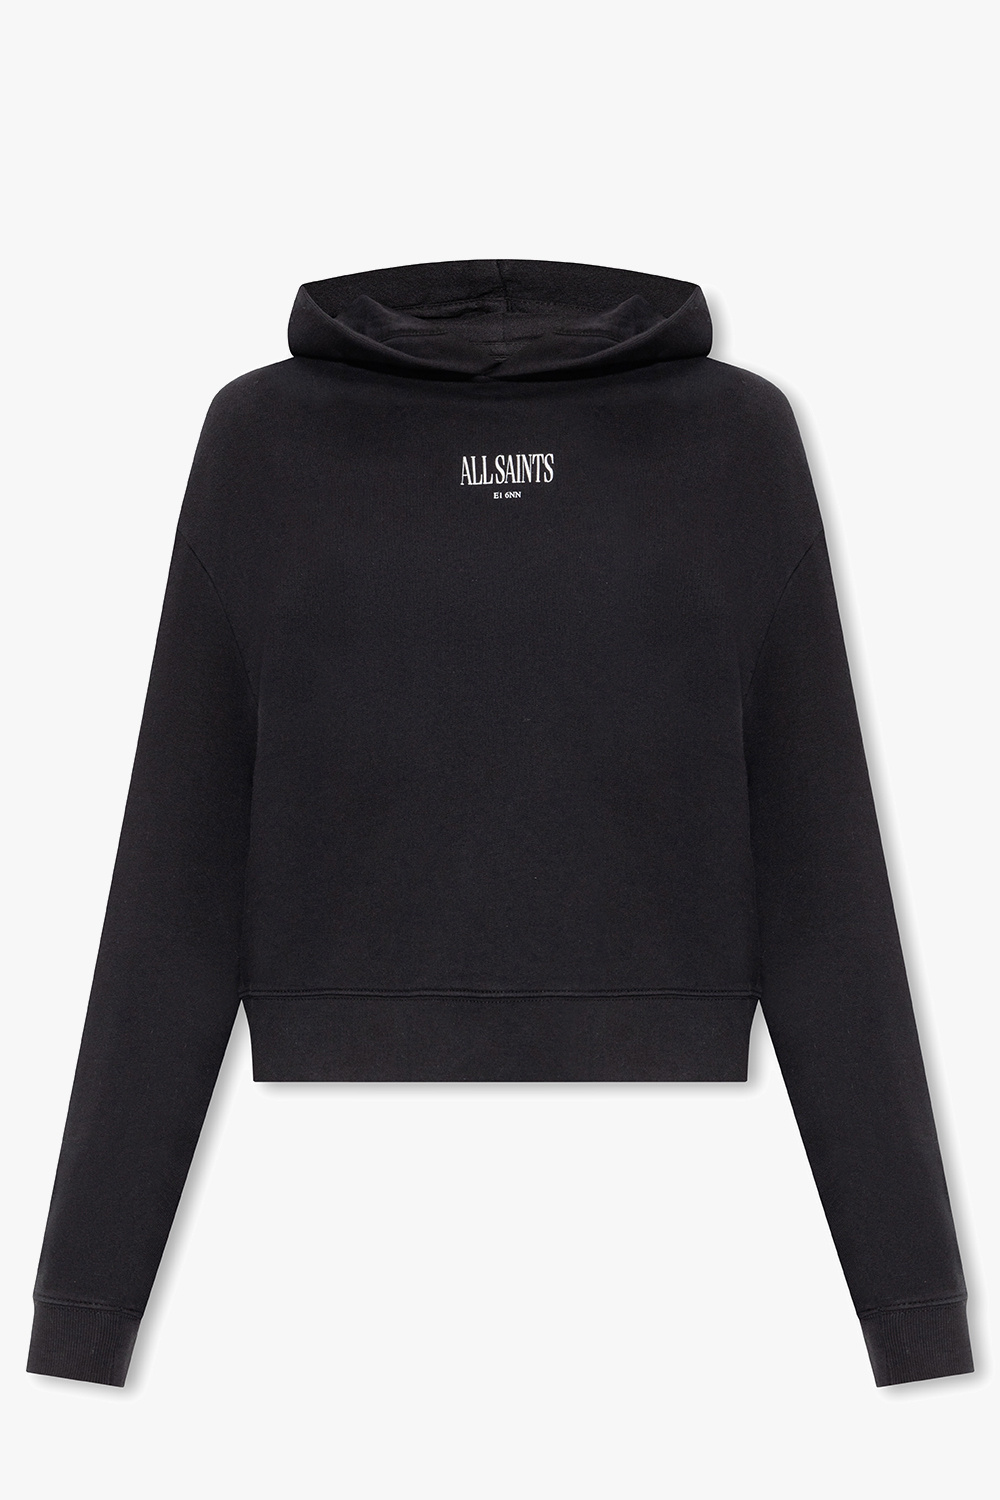 AllSaints ‘Silva Pippa’ and hoodie